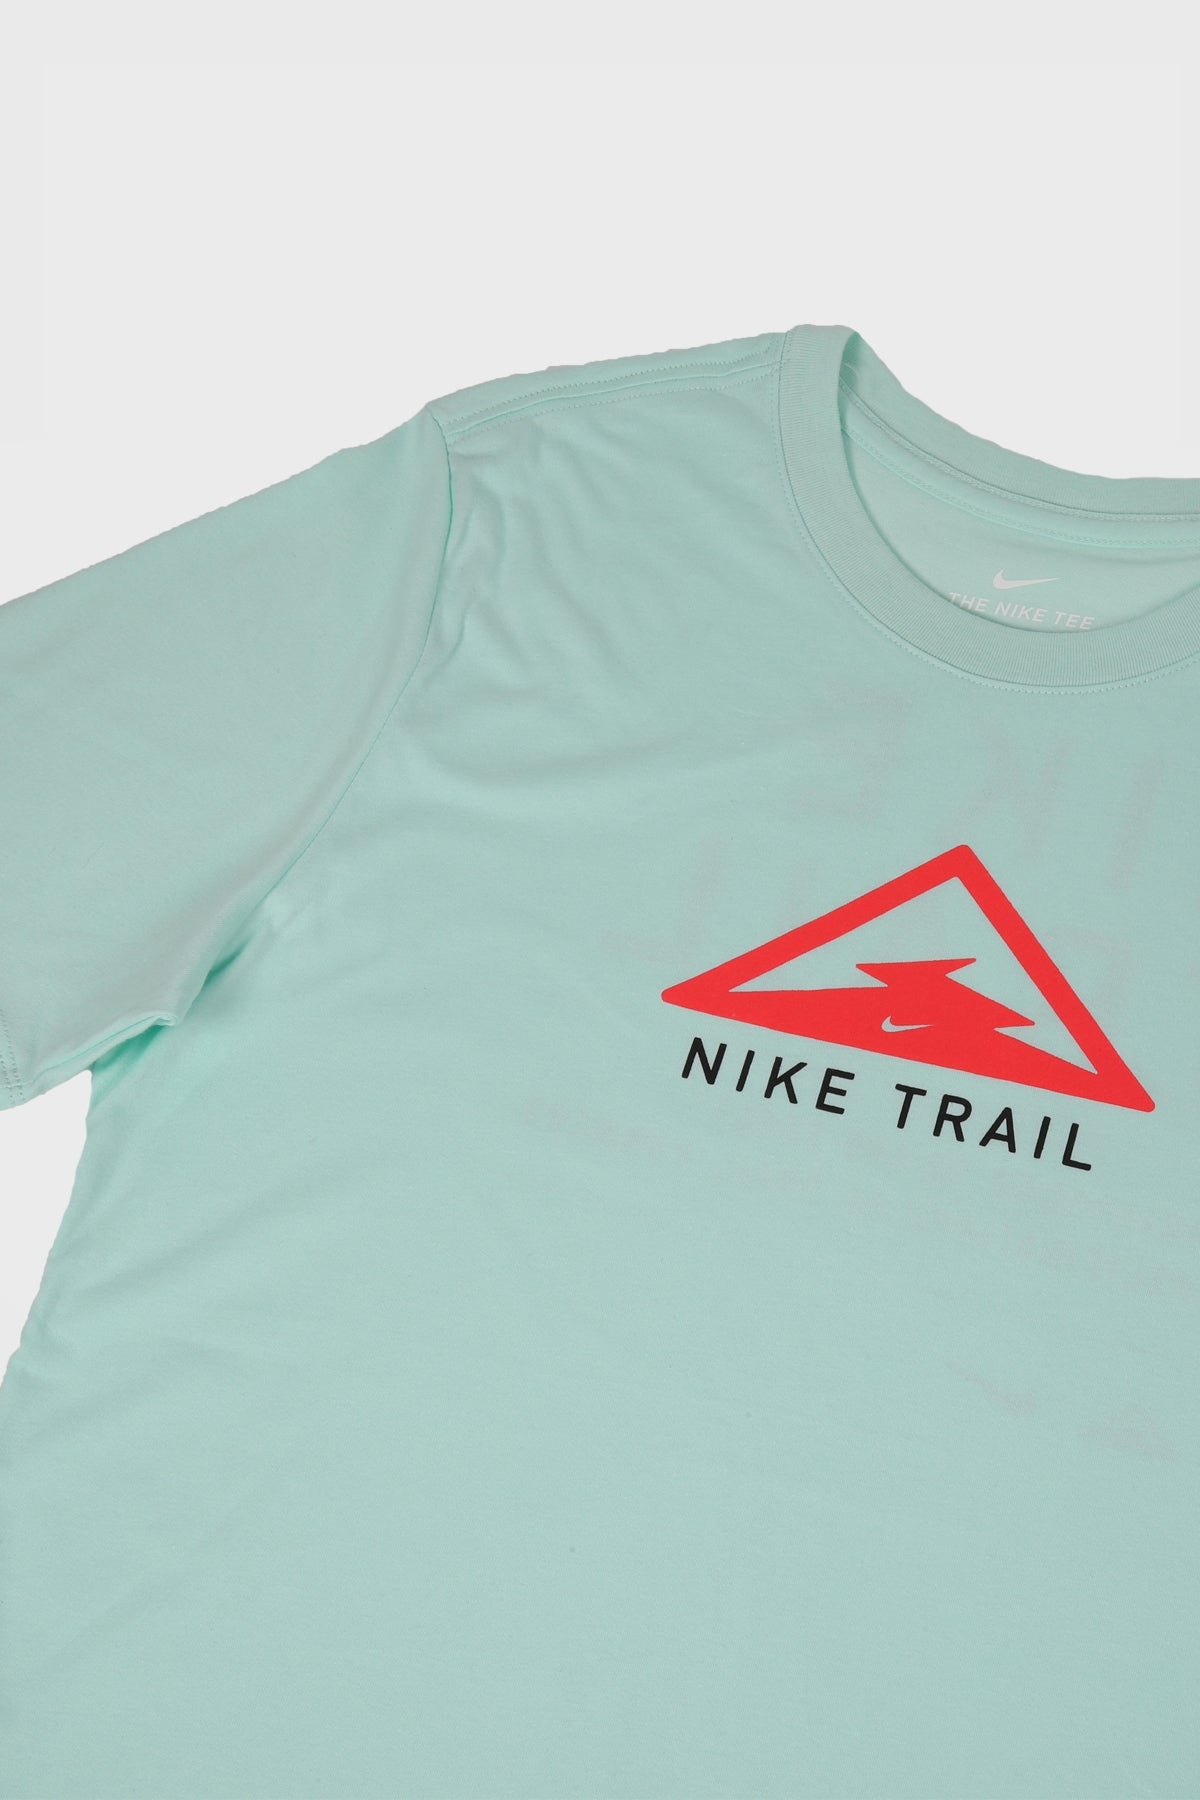 Nike - dry tee trail